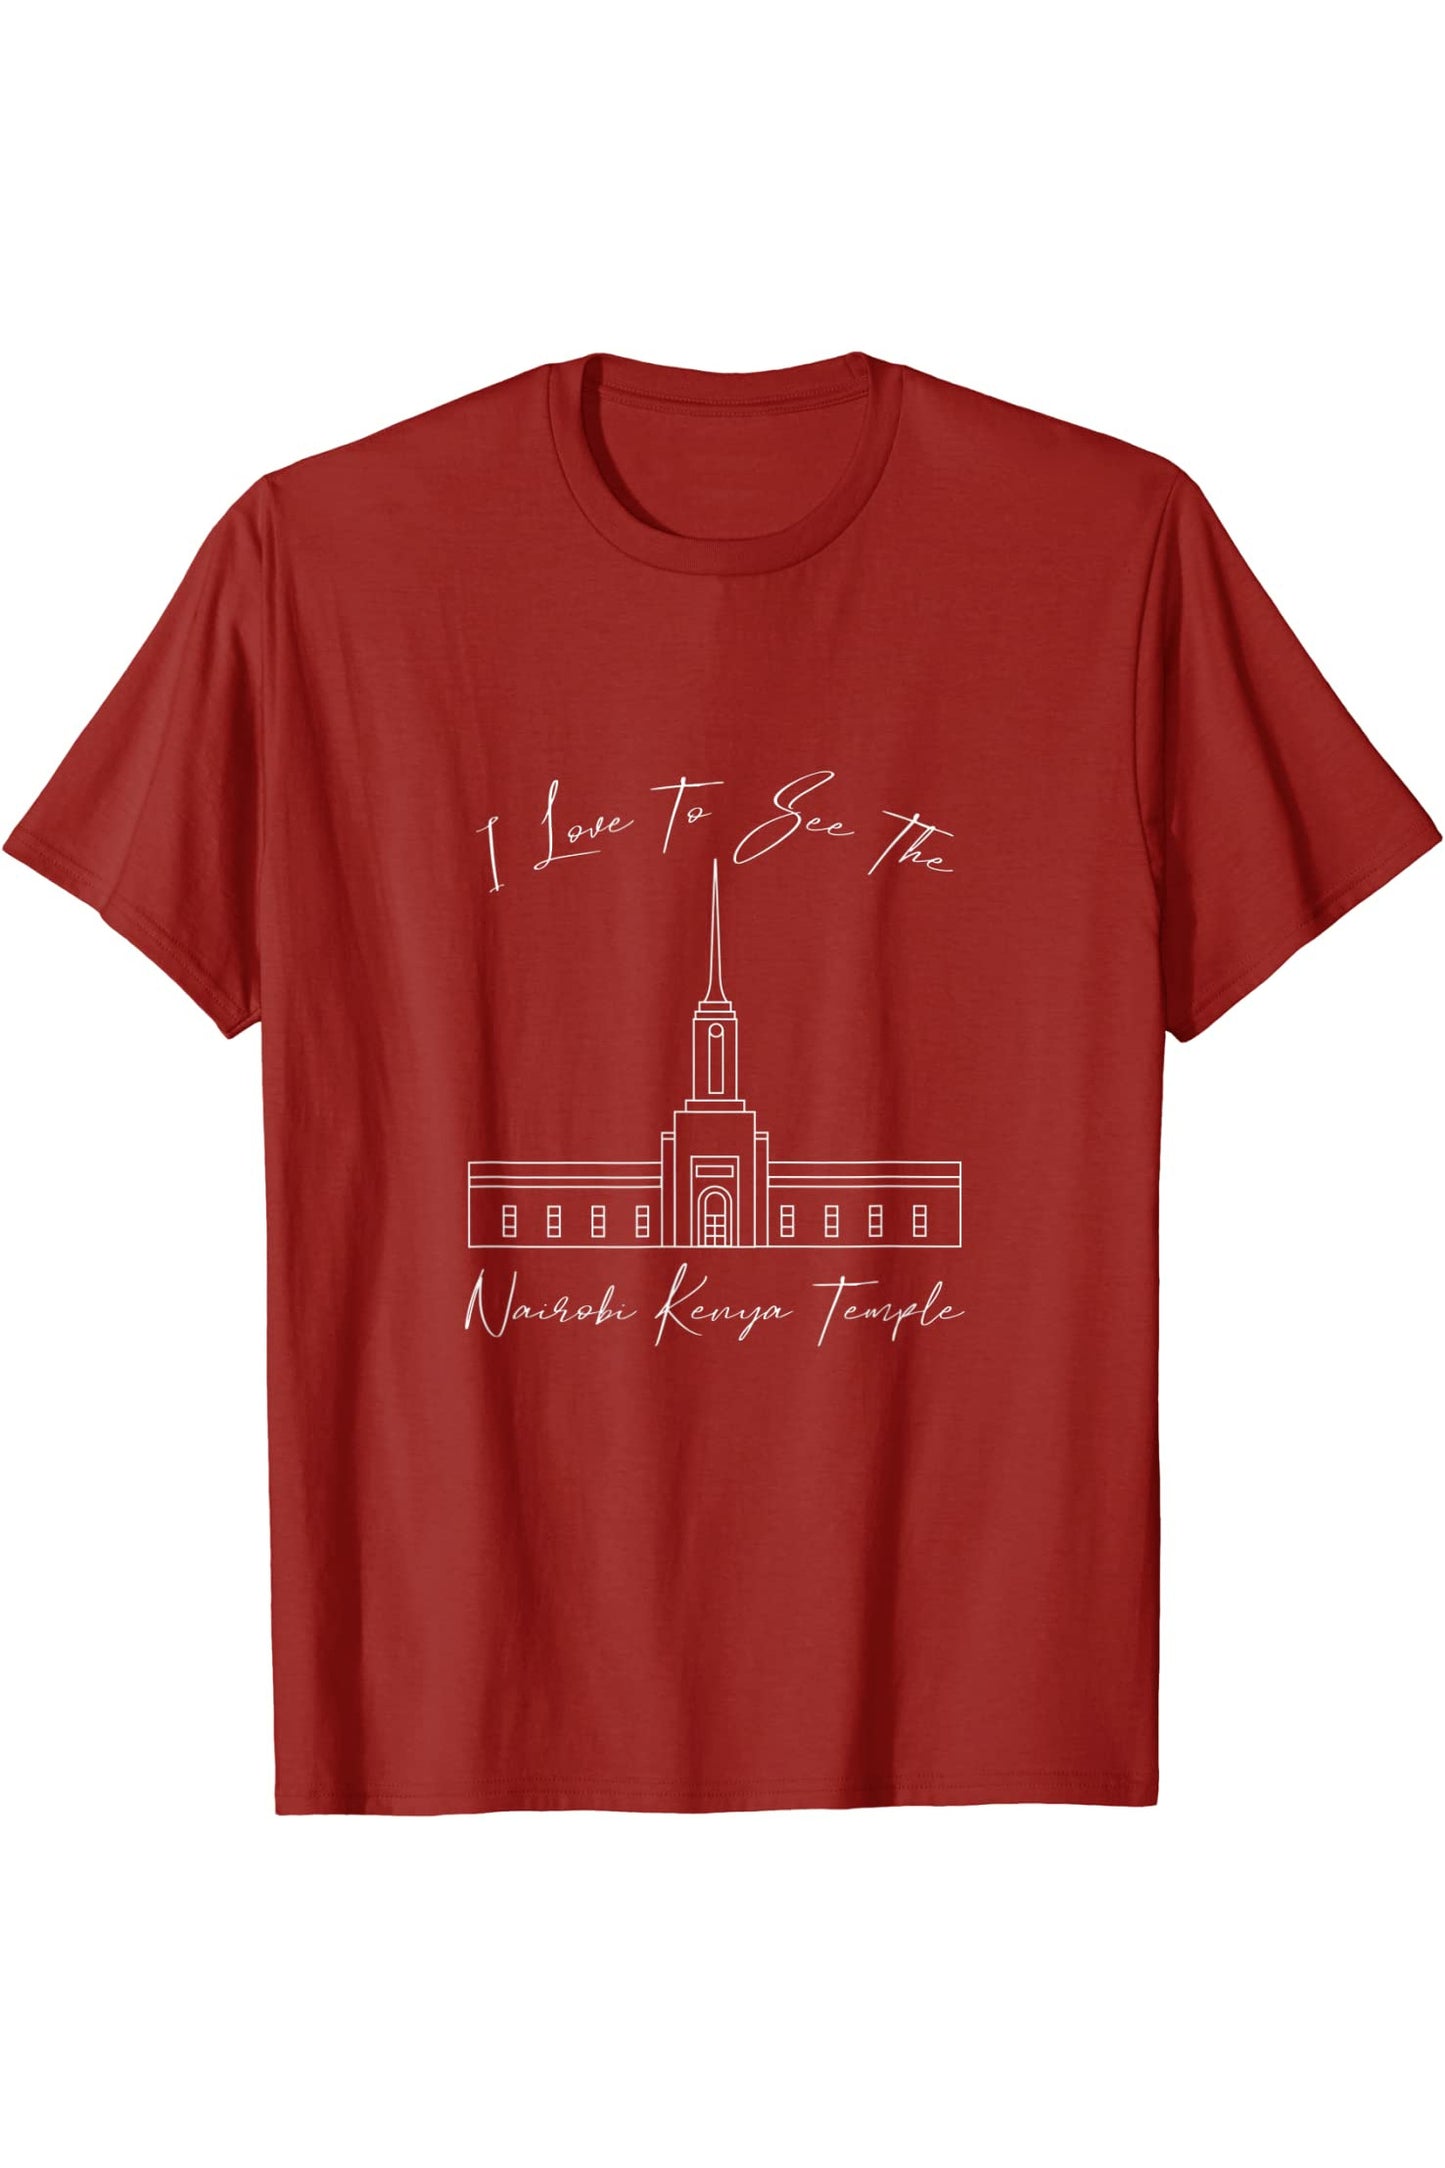 Nairobi Kenya Temple T-Shirt - Calligraphy Style (English) US